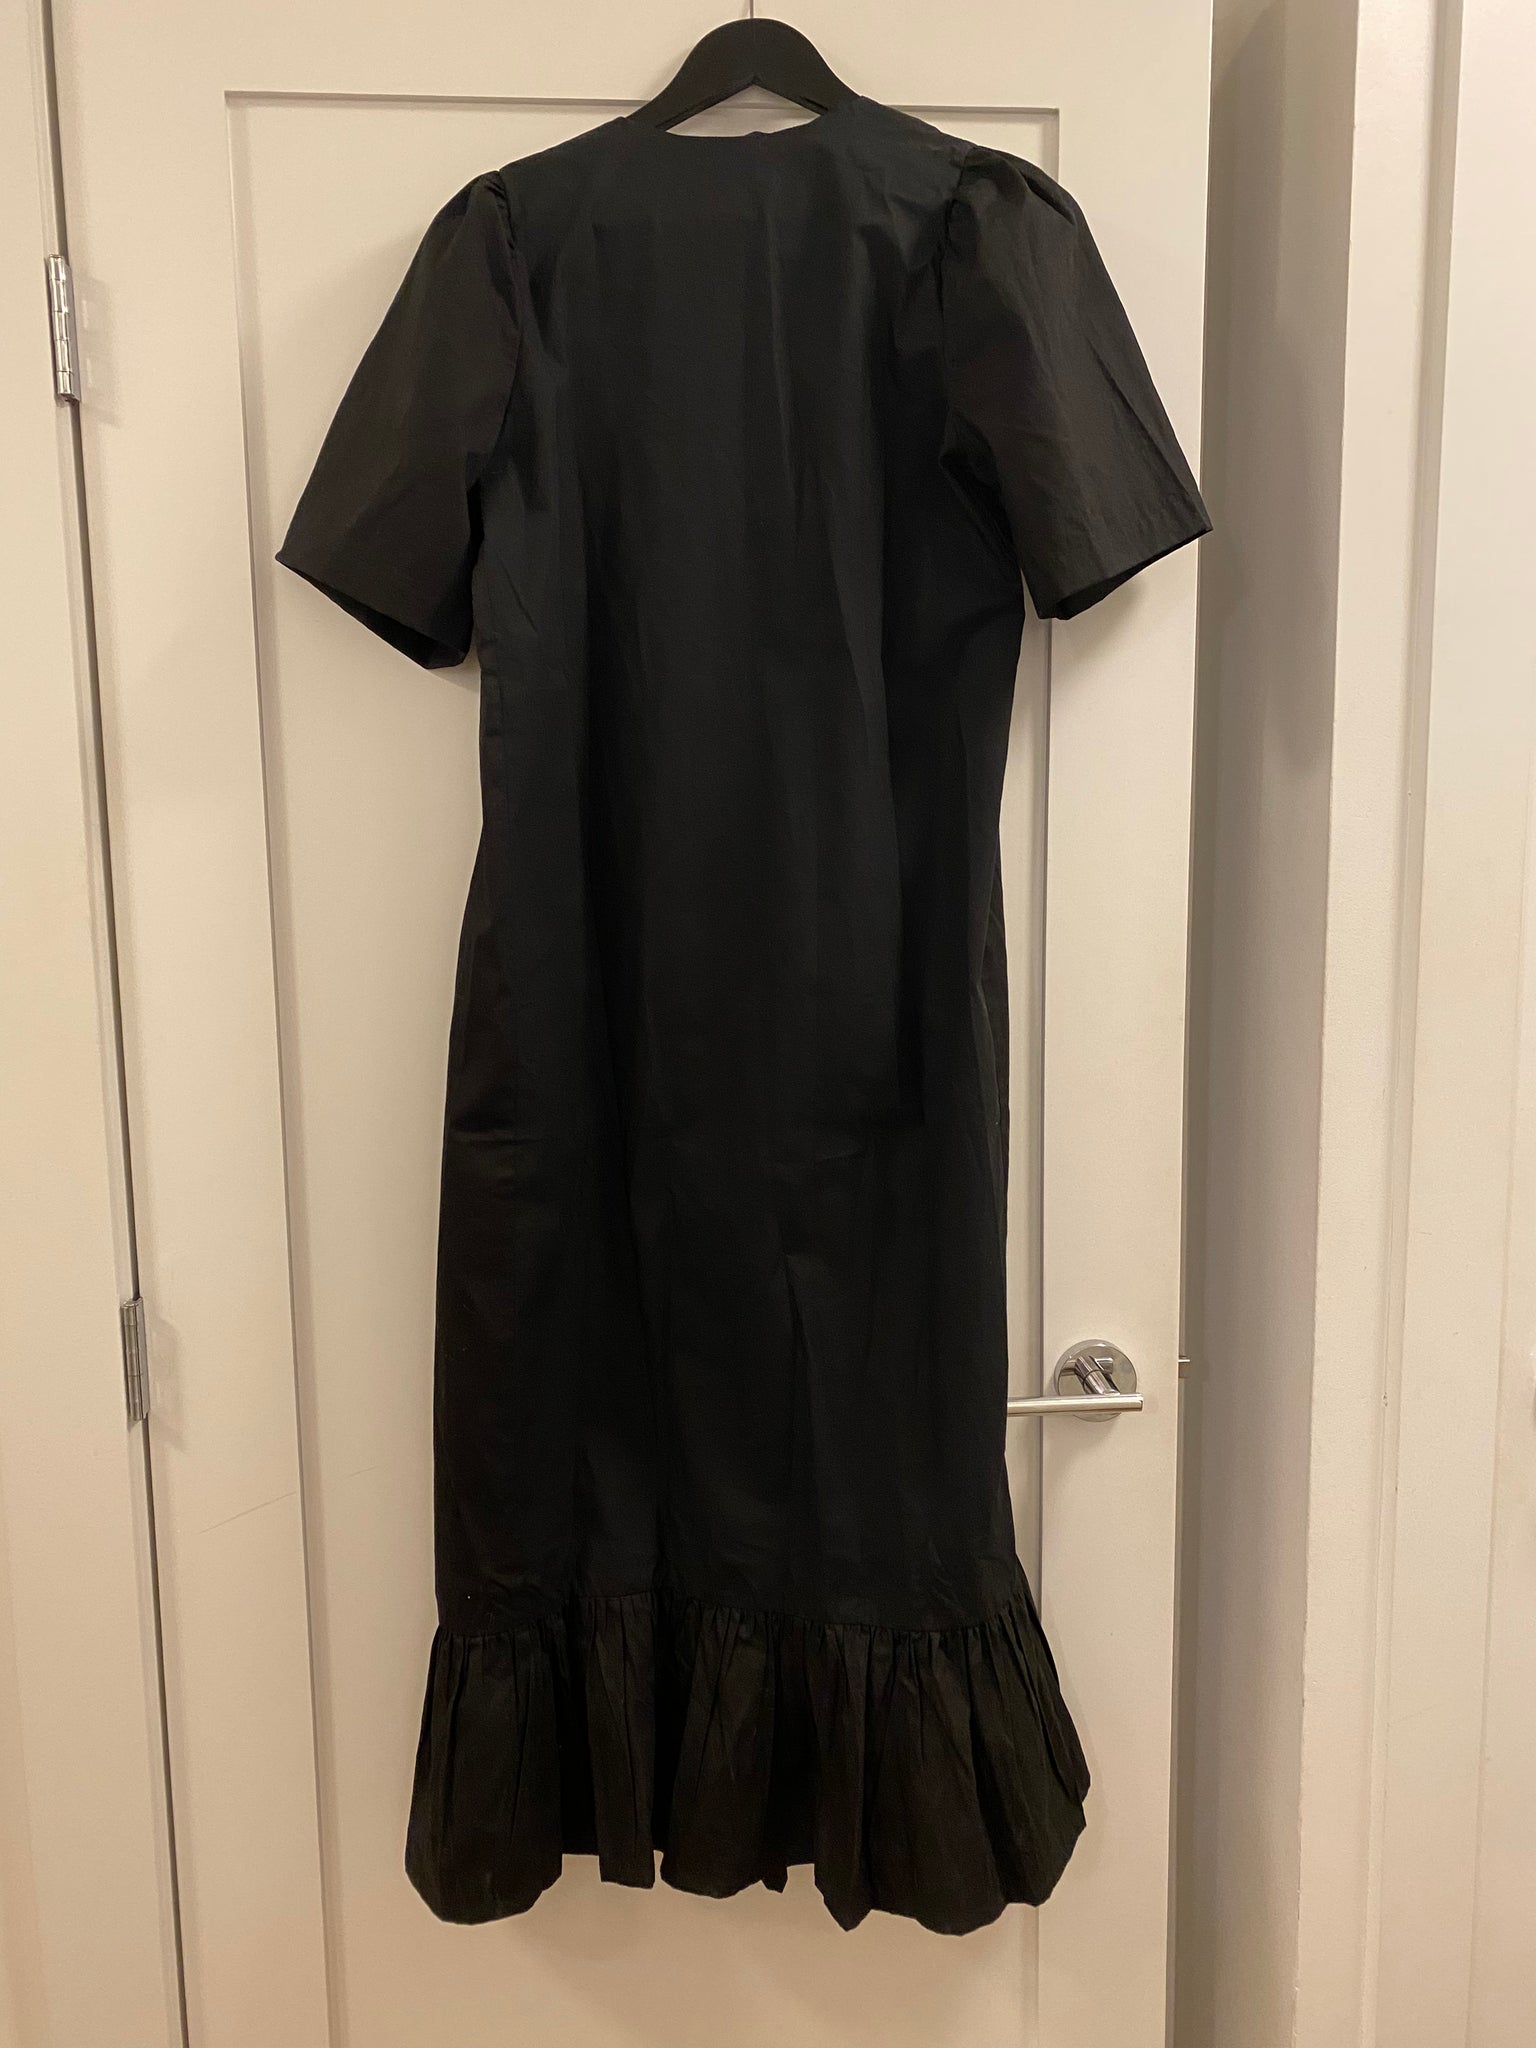 Rolf Dress in Black - Size XS/S